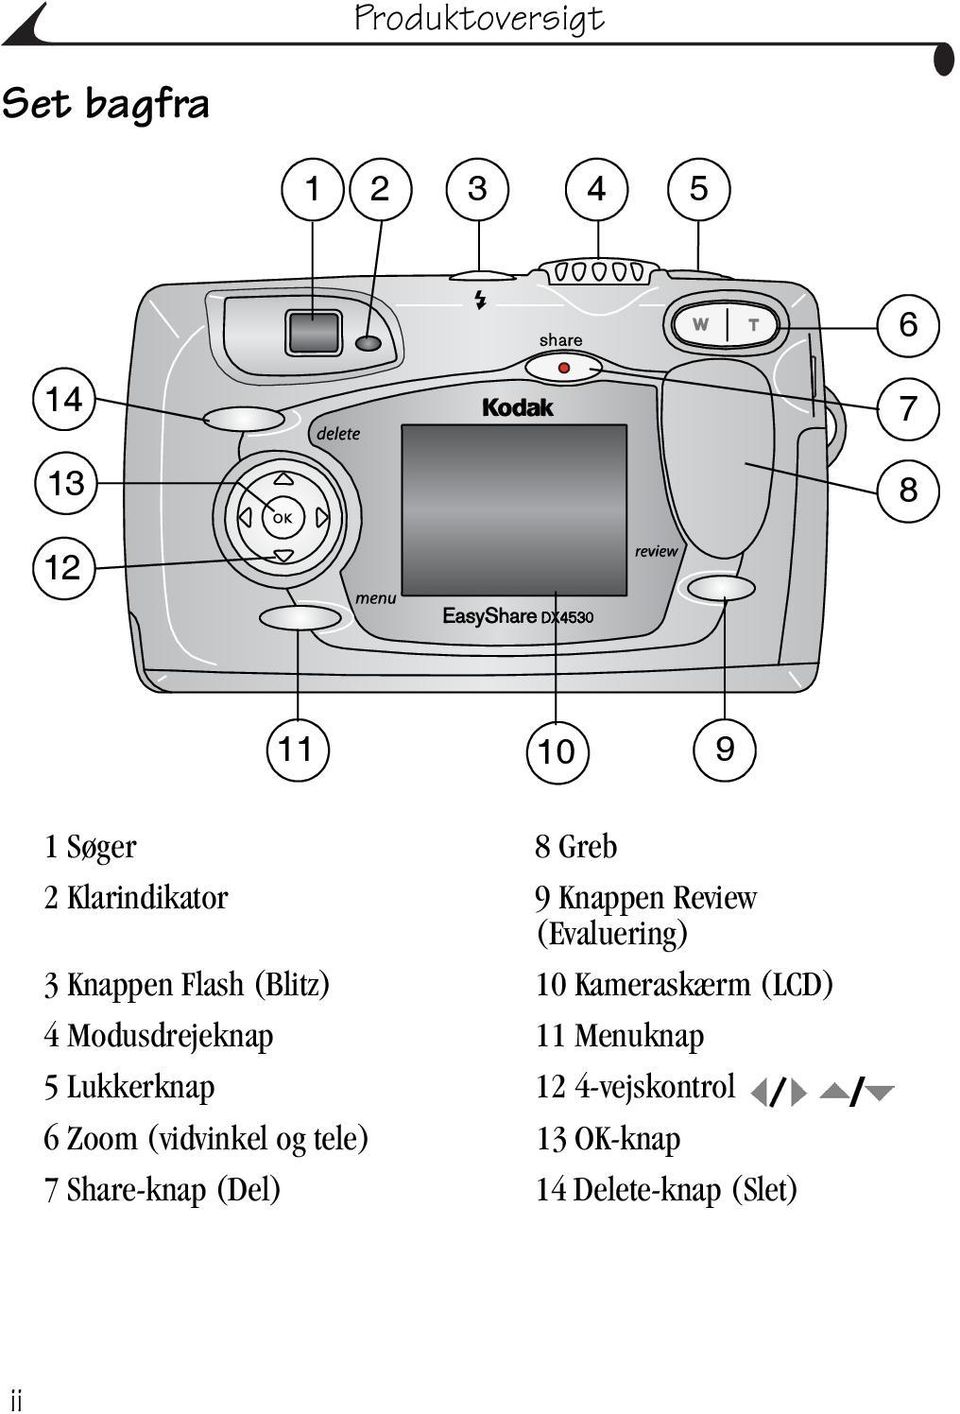 Kameraskærm (LCD) 4 Modusdrejeknap 11 Menuknap 5 Lukkerknap 12 4-vejskontrol